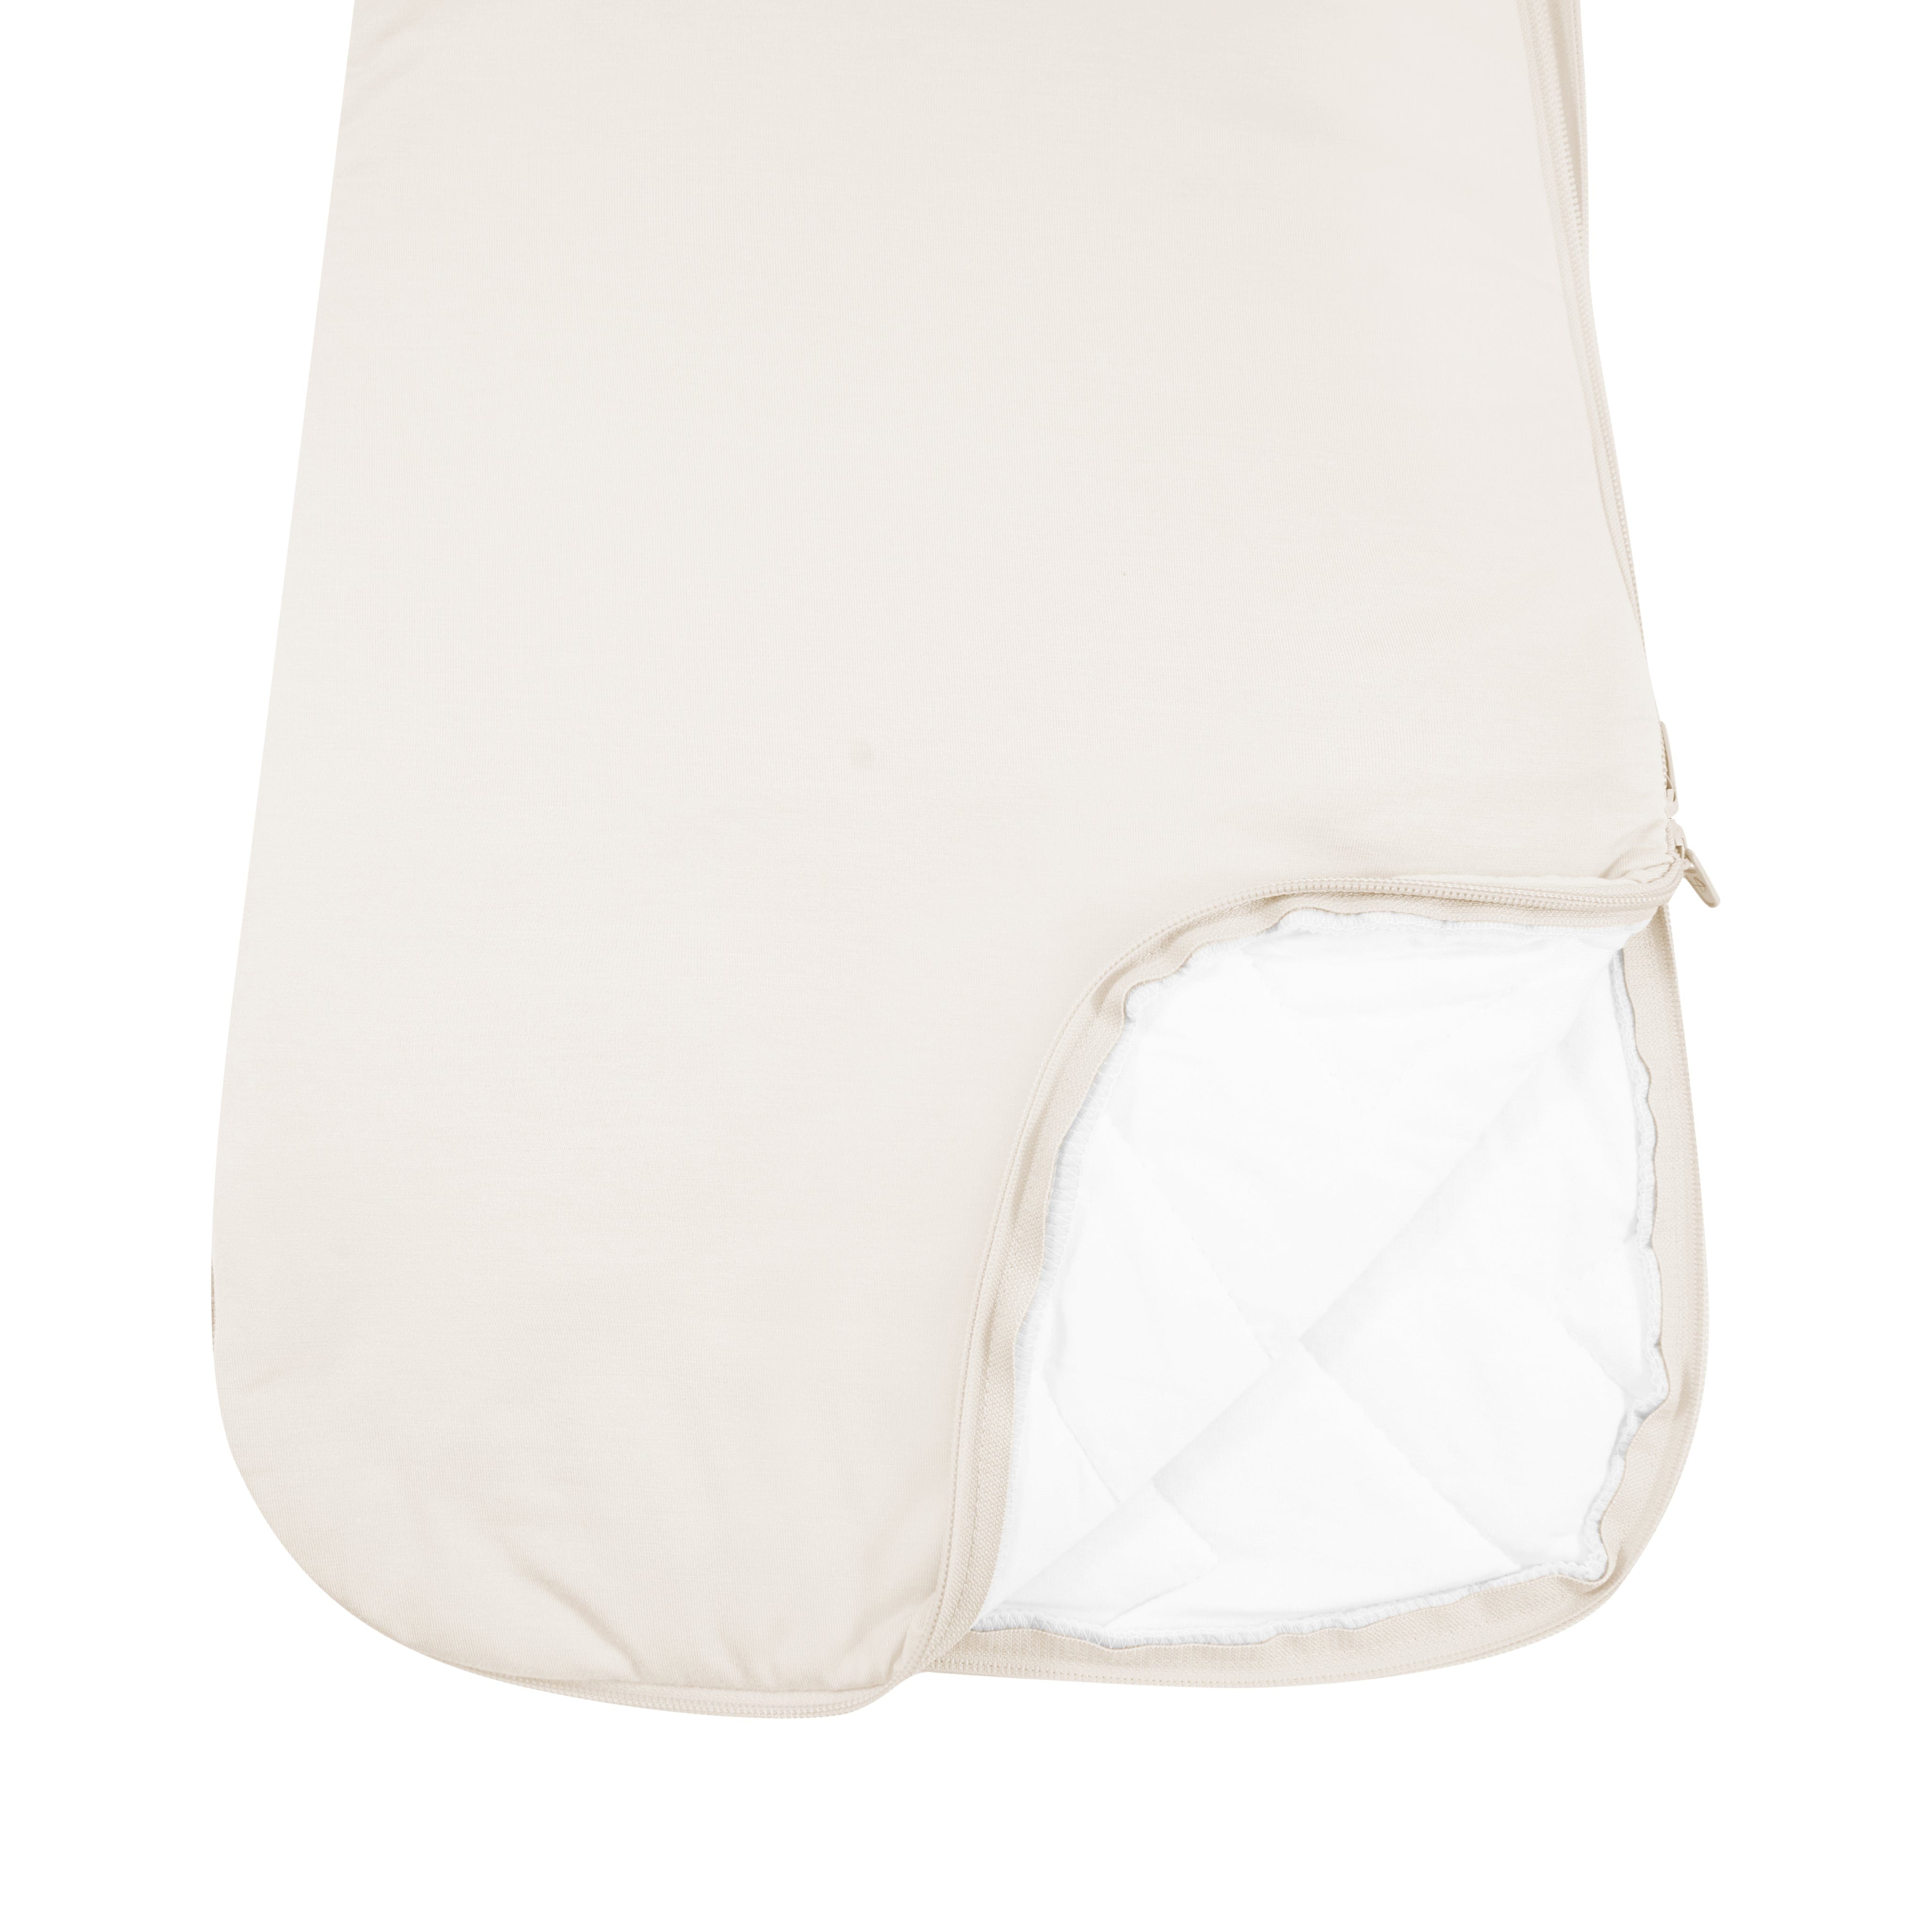 Kyte Baby bamboo Sleep Bag in Oat 2.5 double zipper